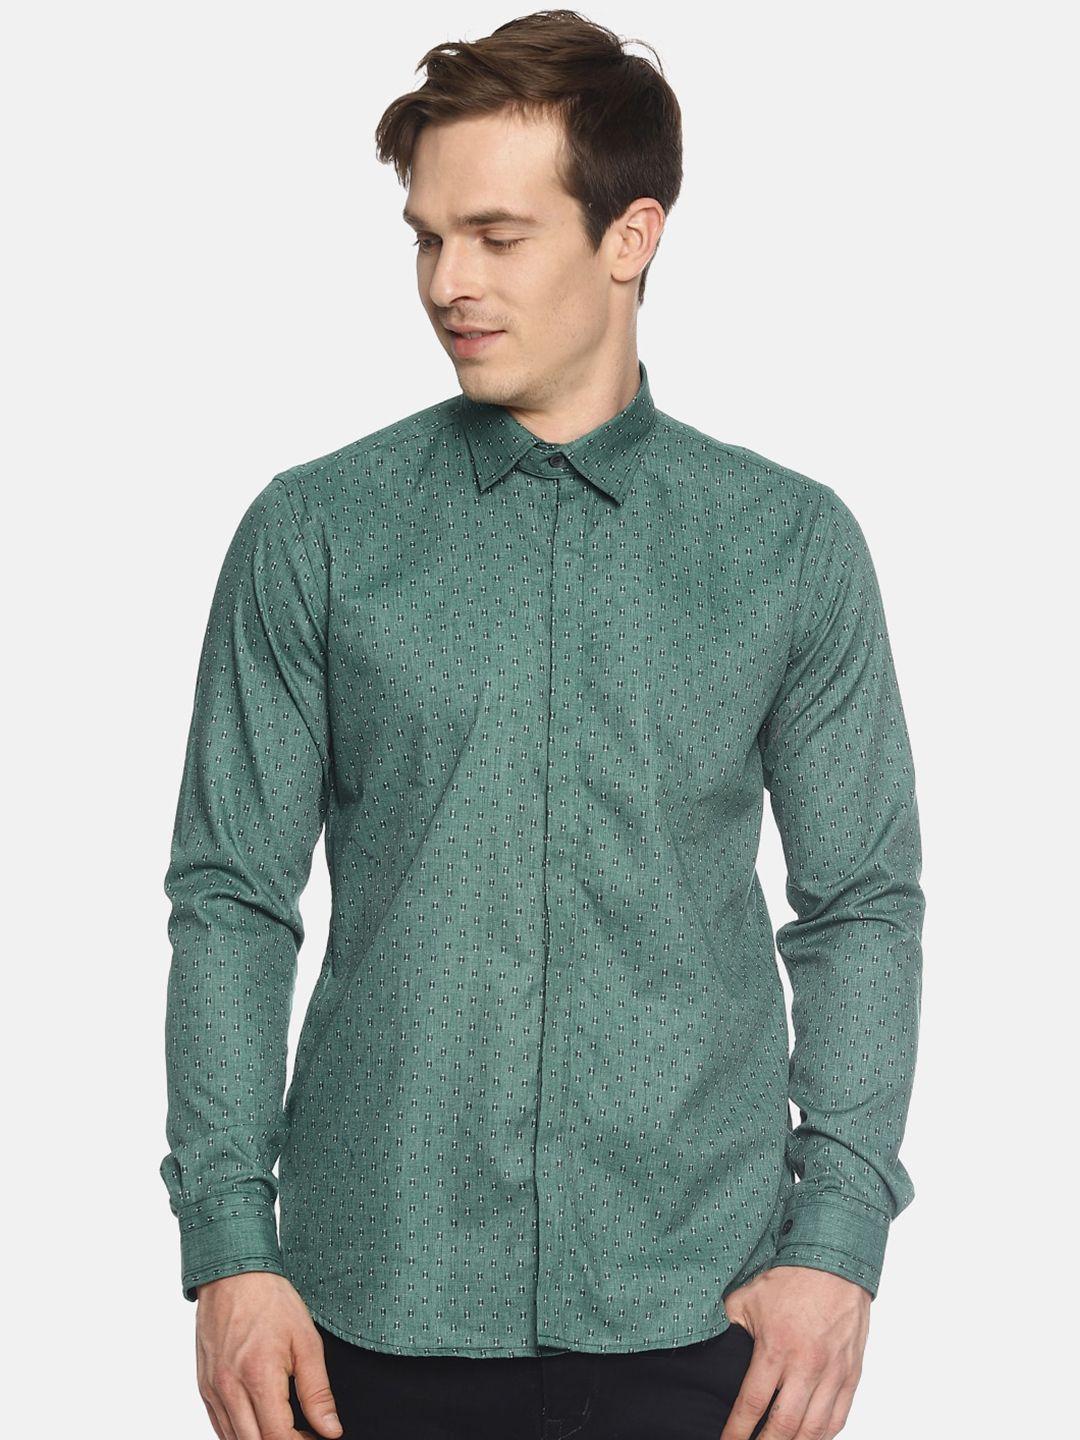 couper-&-coll-men-green-premium-slim-fit-floral-printed-pure-cotton-casual-shirt